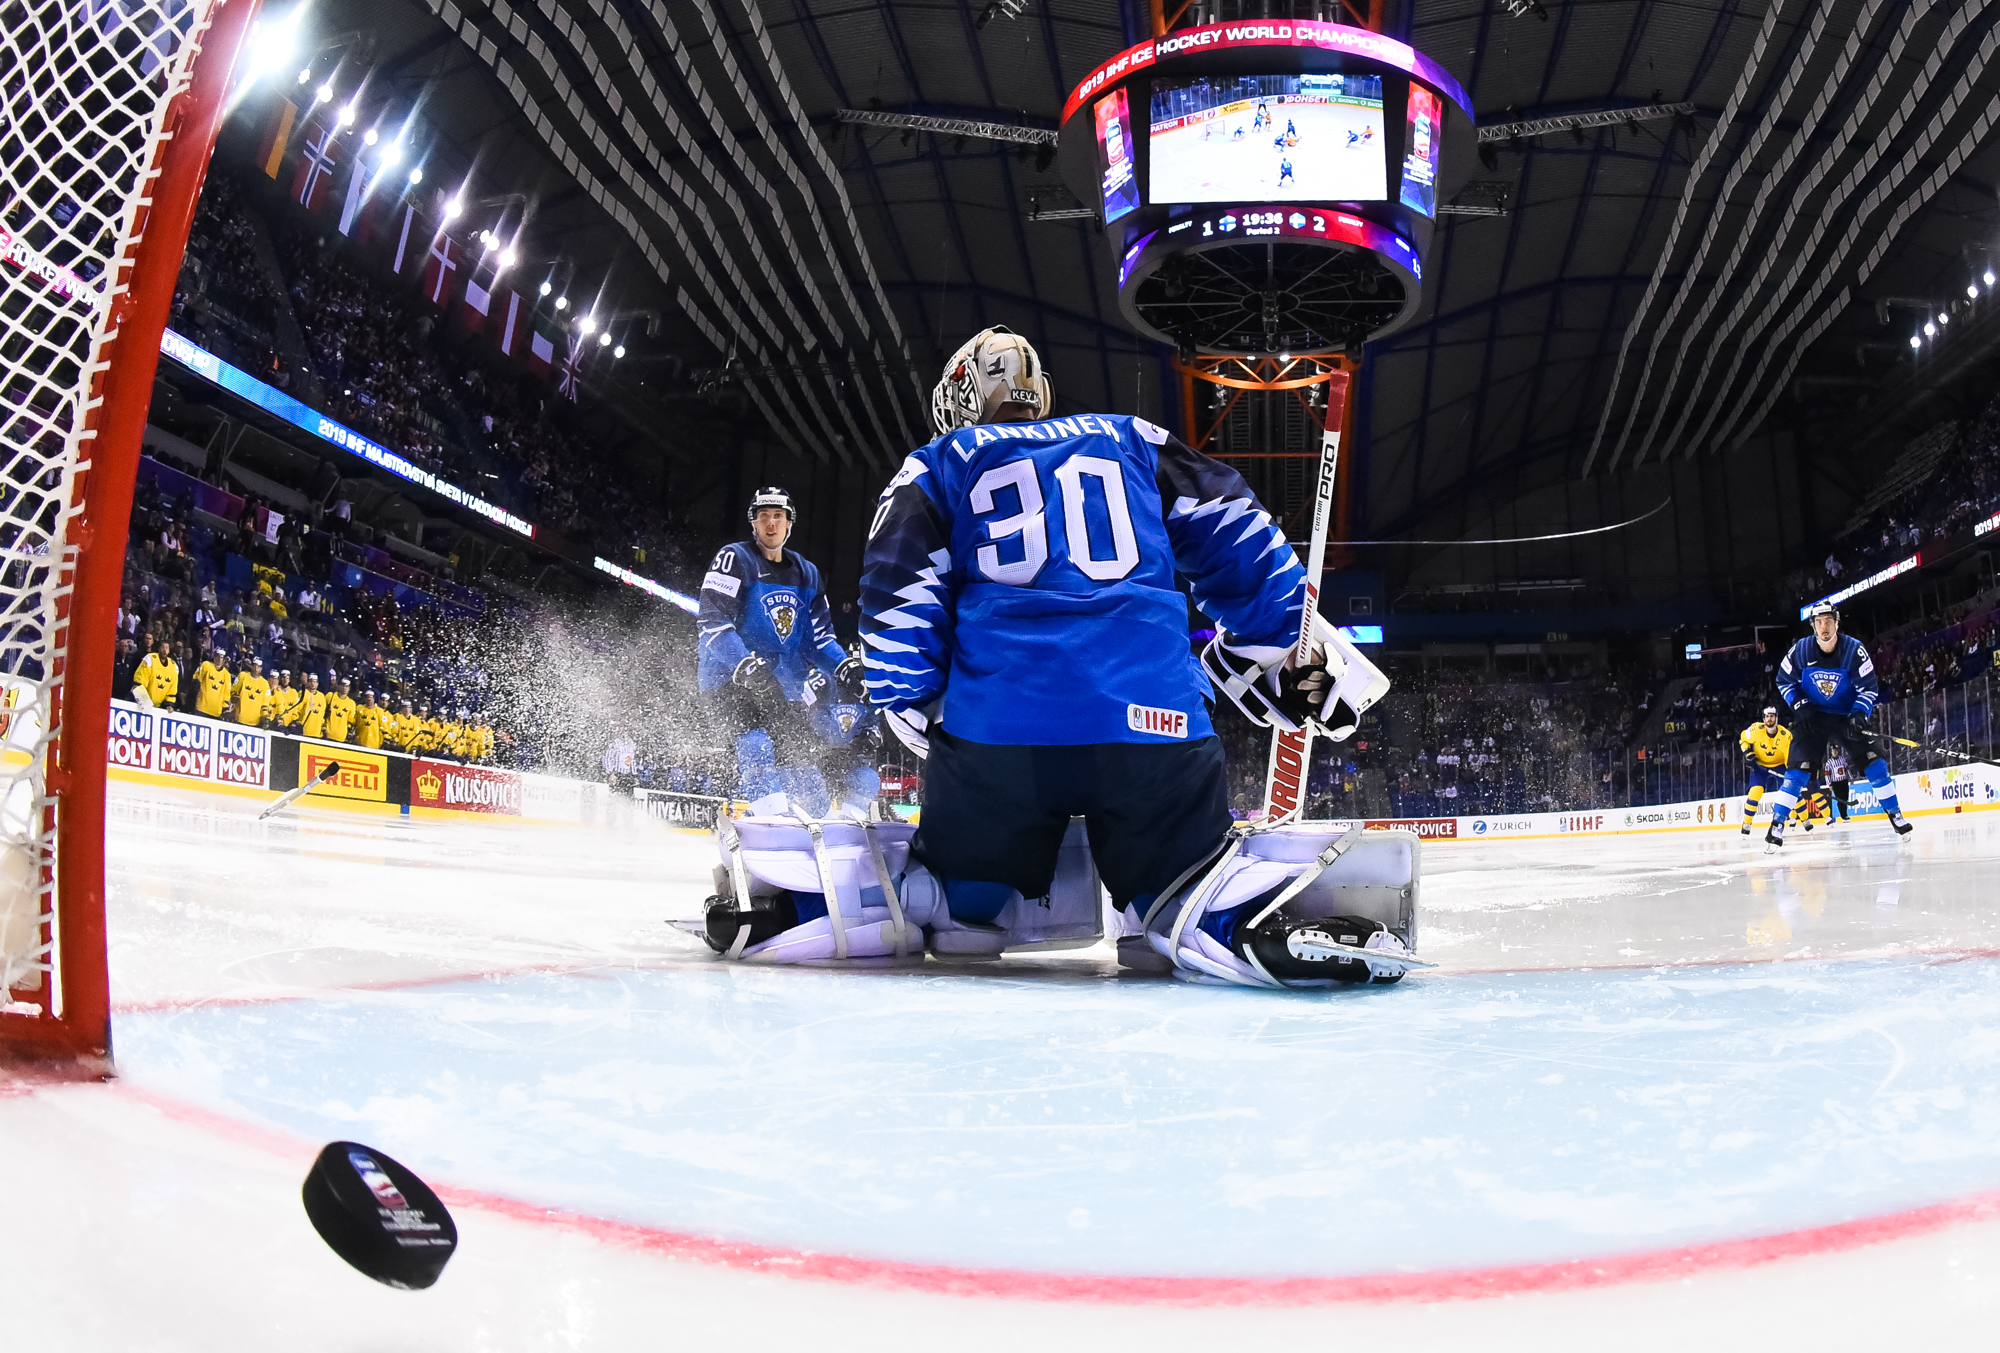 IIHF 2019 World Tournament Review - Sweden